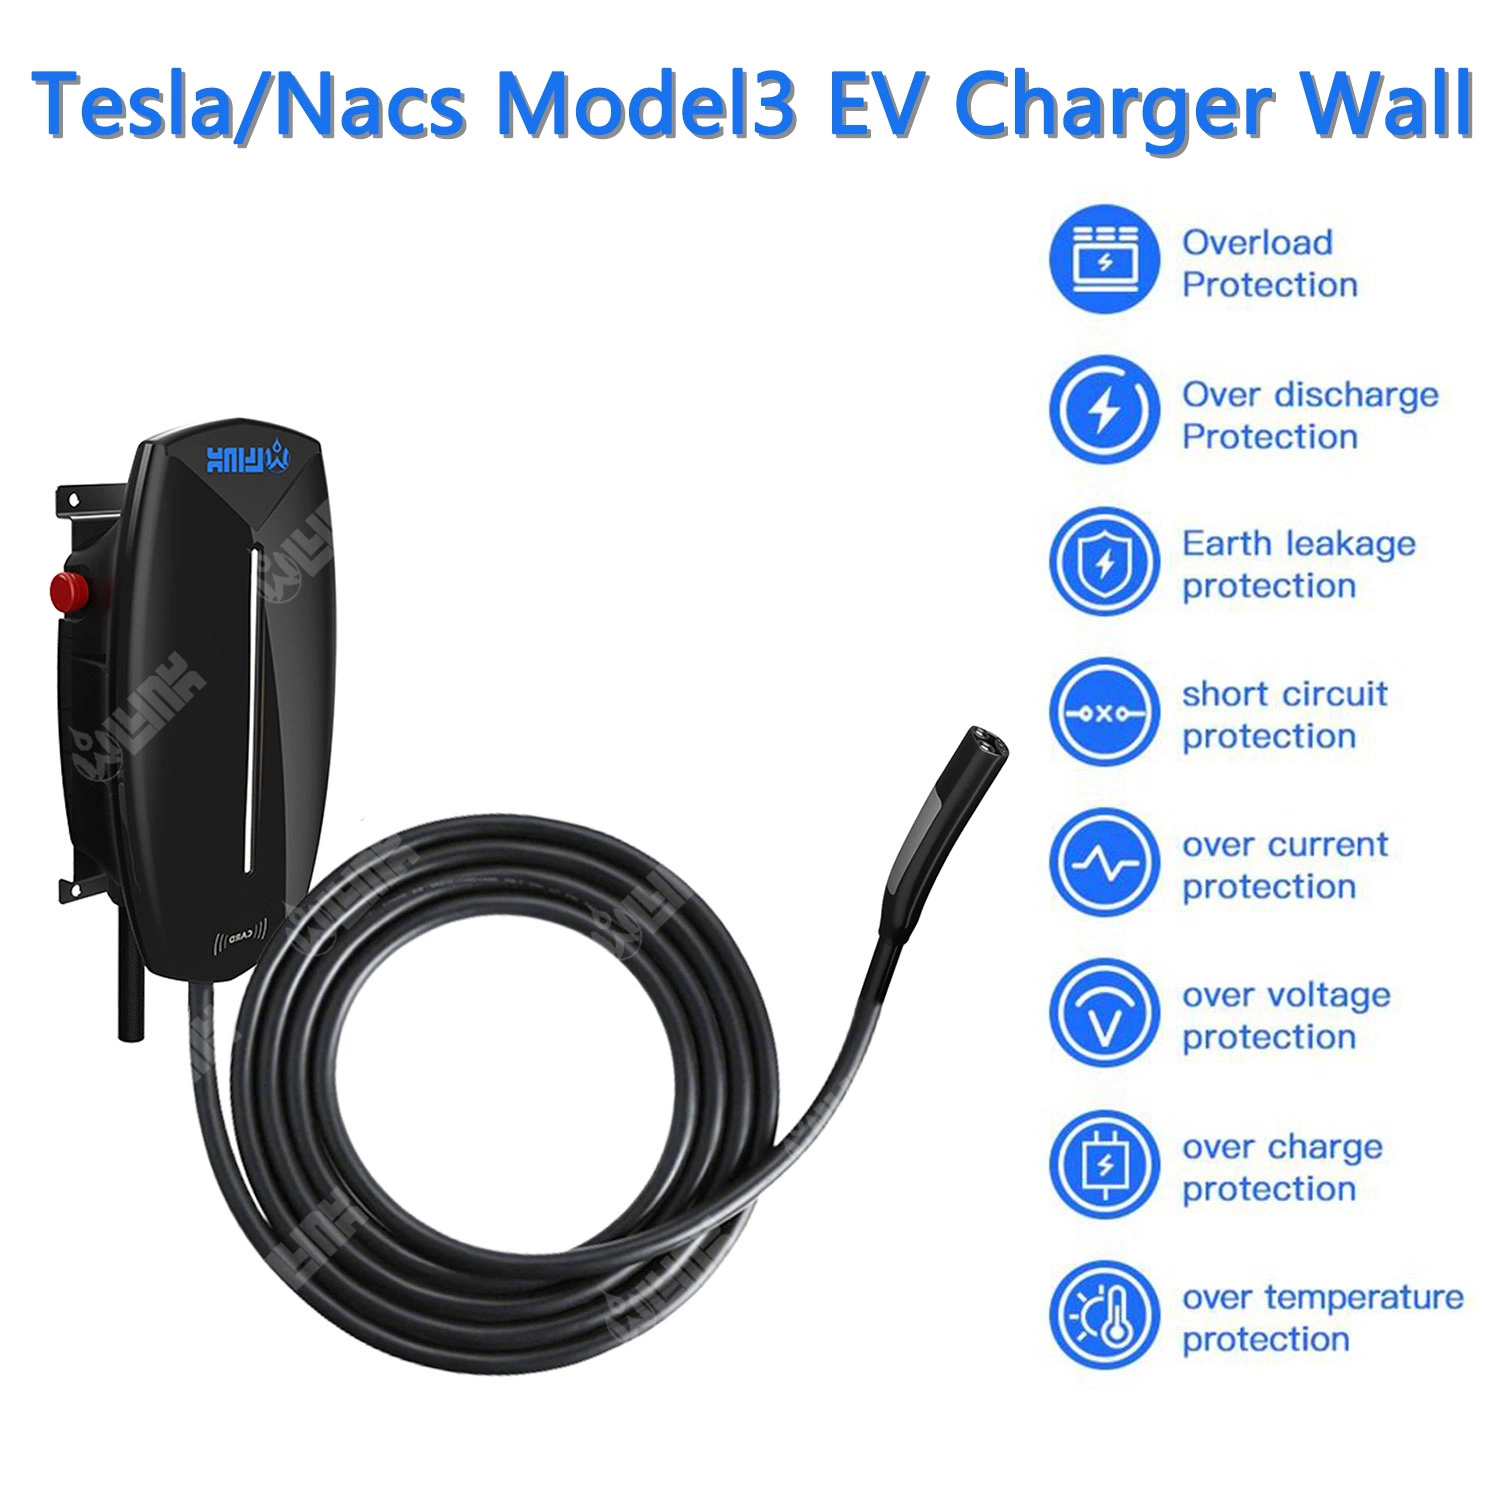 Car EV Charging Station Tesla Wall Connector 11kw 48A Tesla Nacs Model3 EV Charger Nacs Wallbox Pile